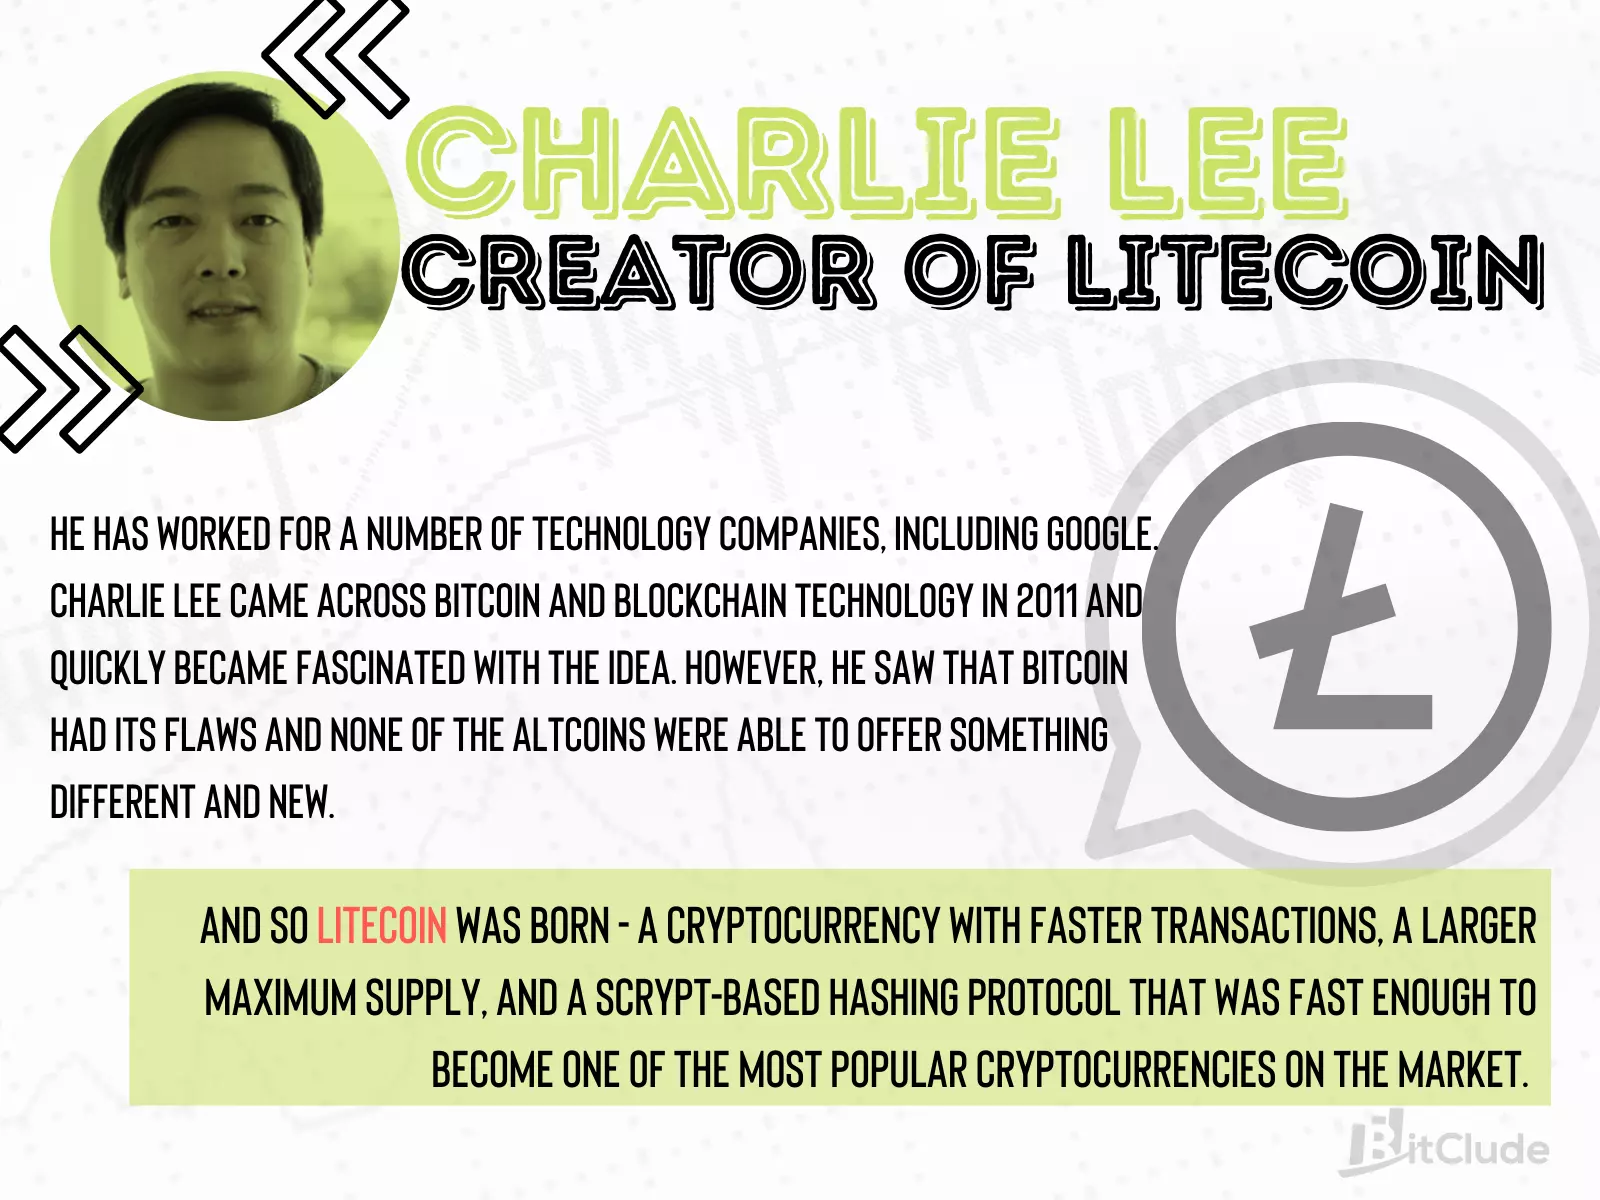 Creator of Litecoin - Charlie Lee